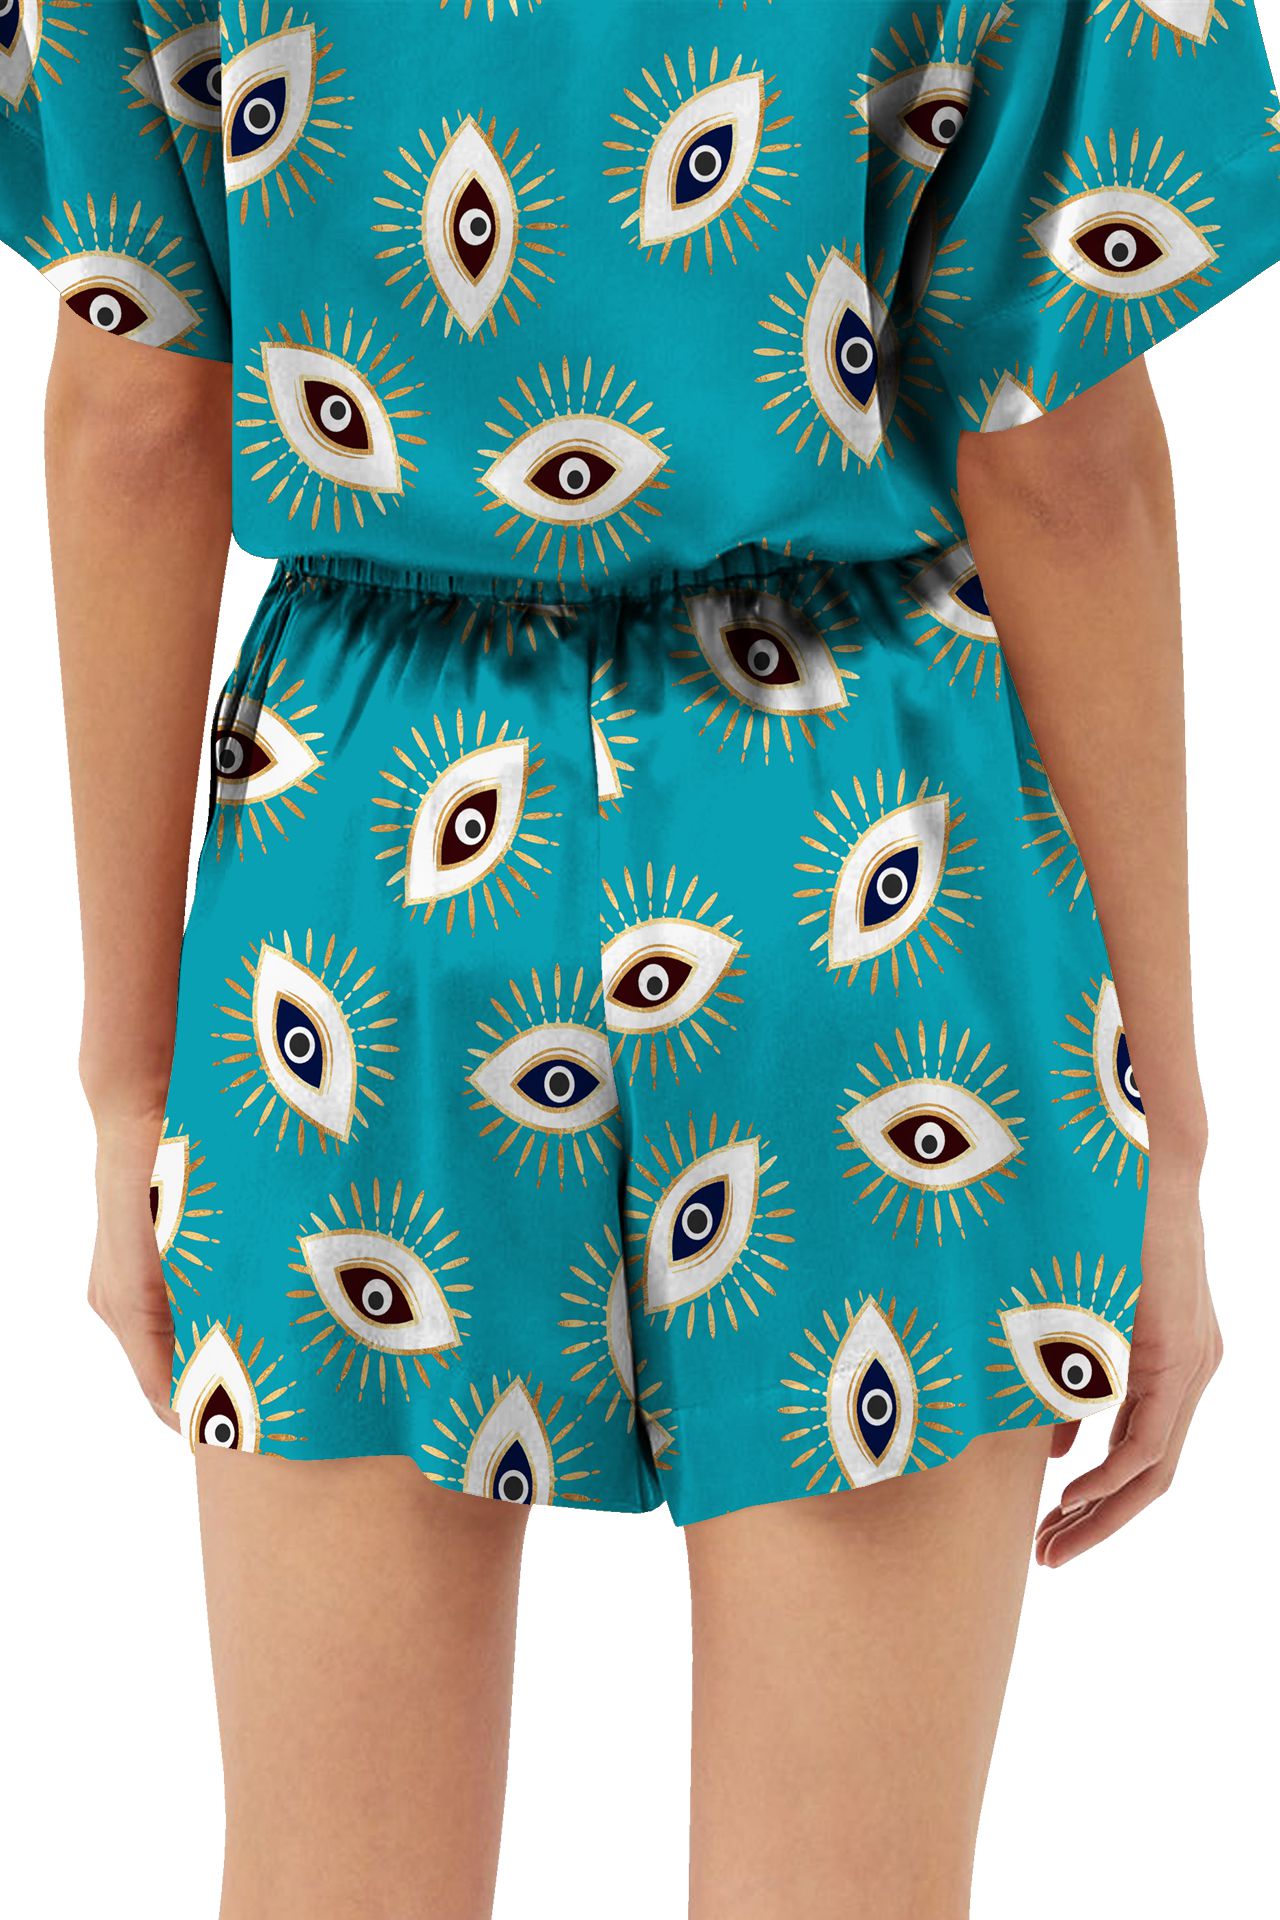 "Kyle X Shahida" "ladies summer shorts" "womens designer shorts" "shorts for curvy women"